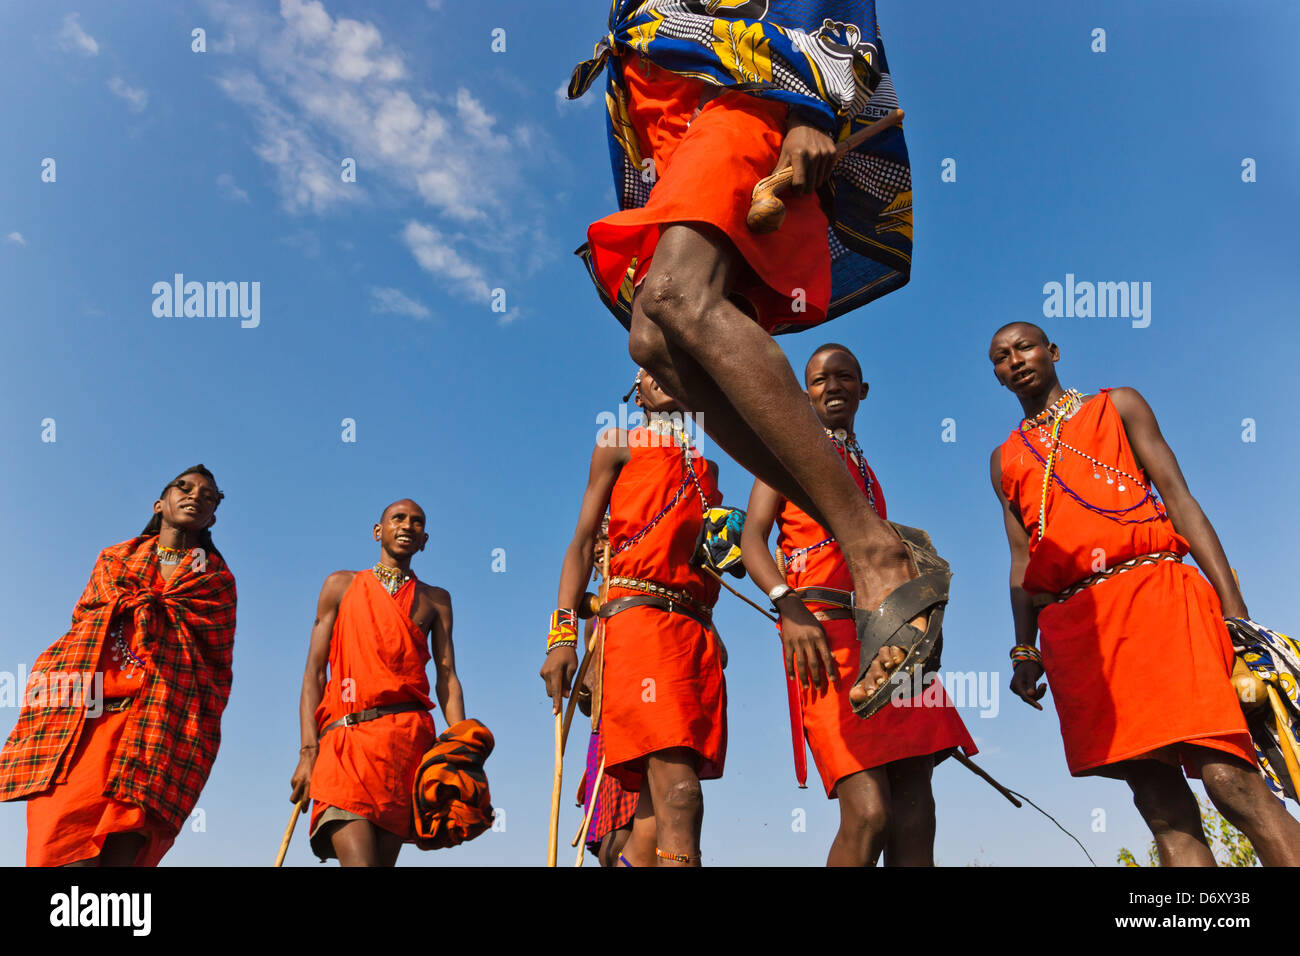 Masai tribespeople realizar saltos, danza Masai Mara, Kenya Foto de stock